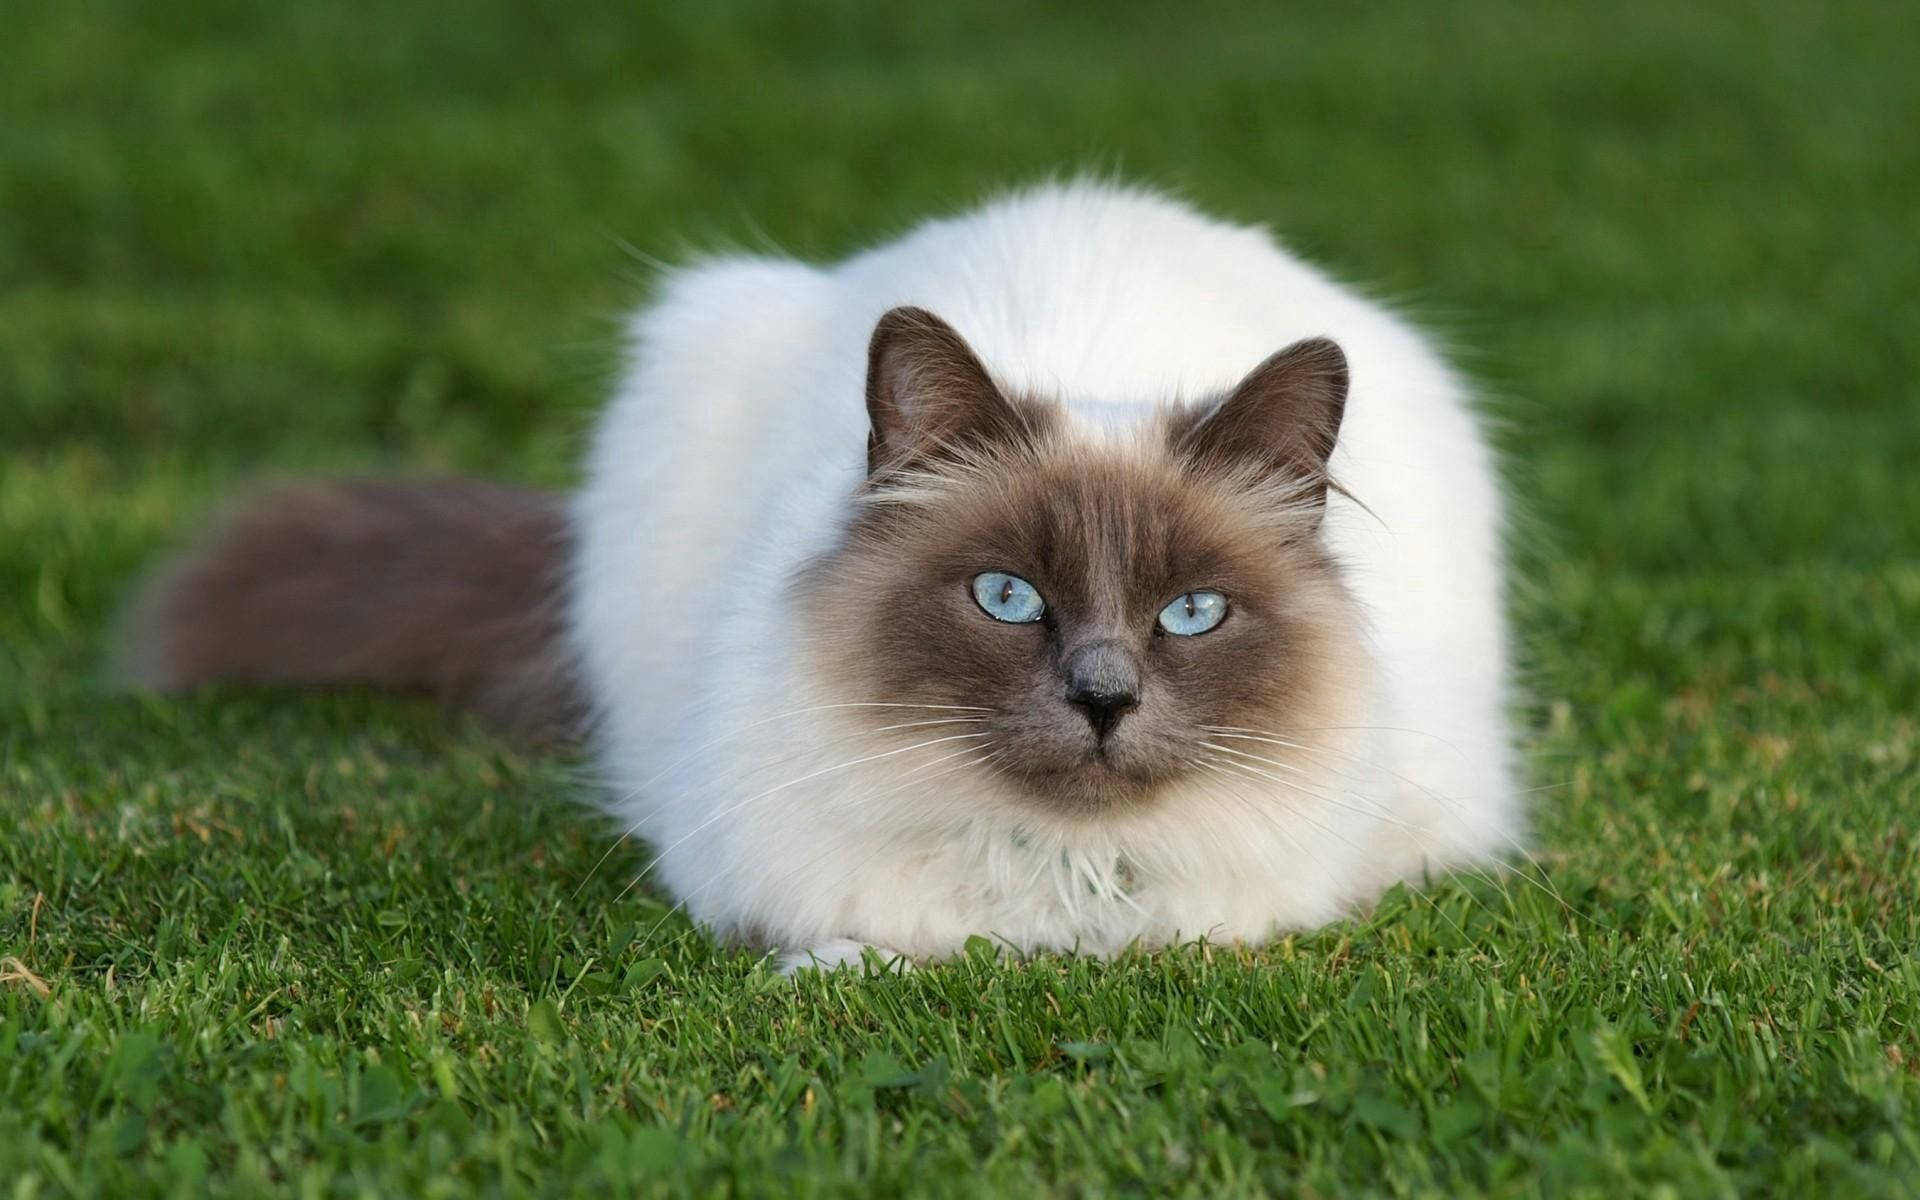 A cute chubby cat living its best life as a furry friend Wallpaper